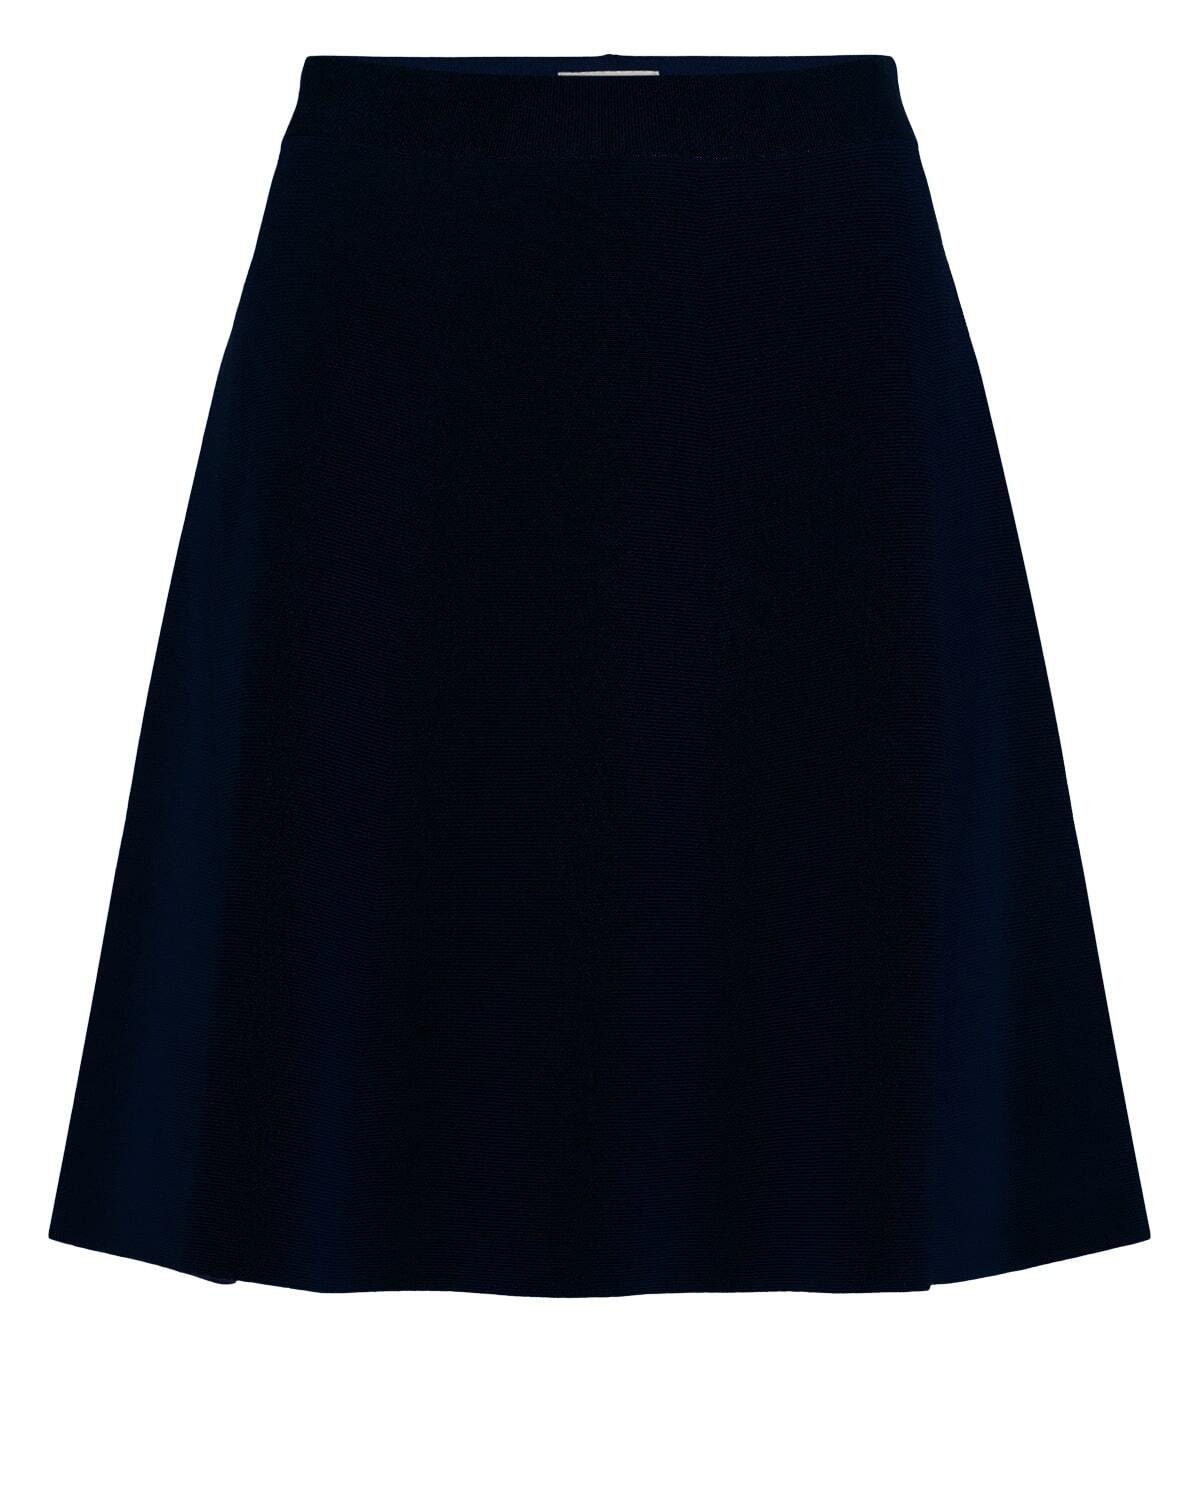 
                  
                    NULILLYPILLY Dark Sapphire Skirt
                  
                